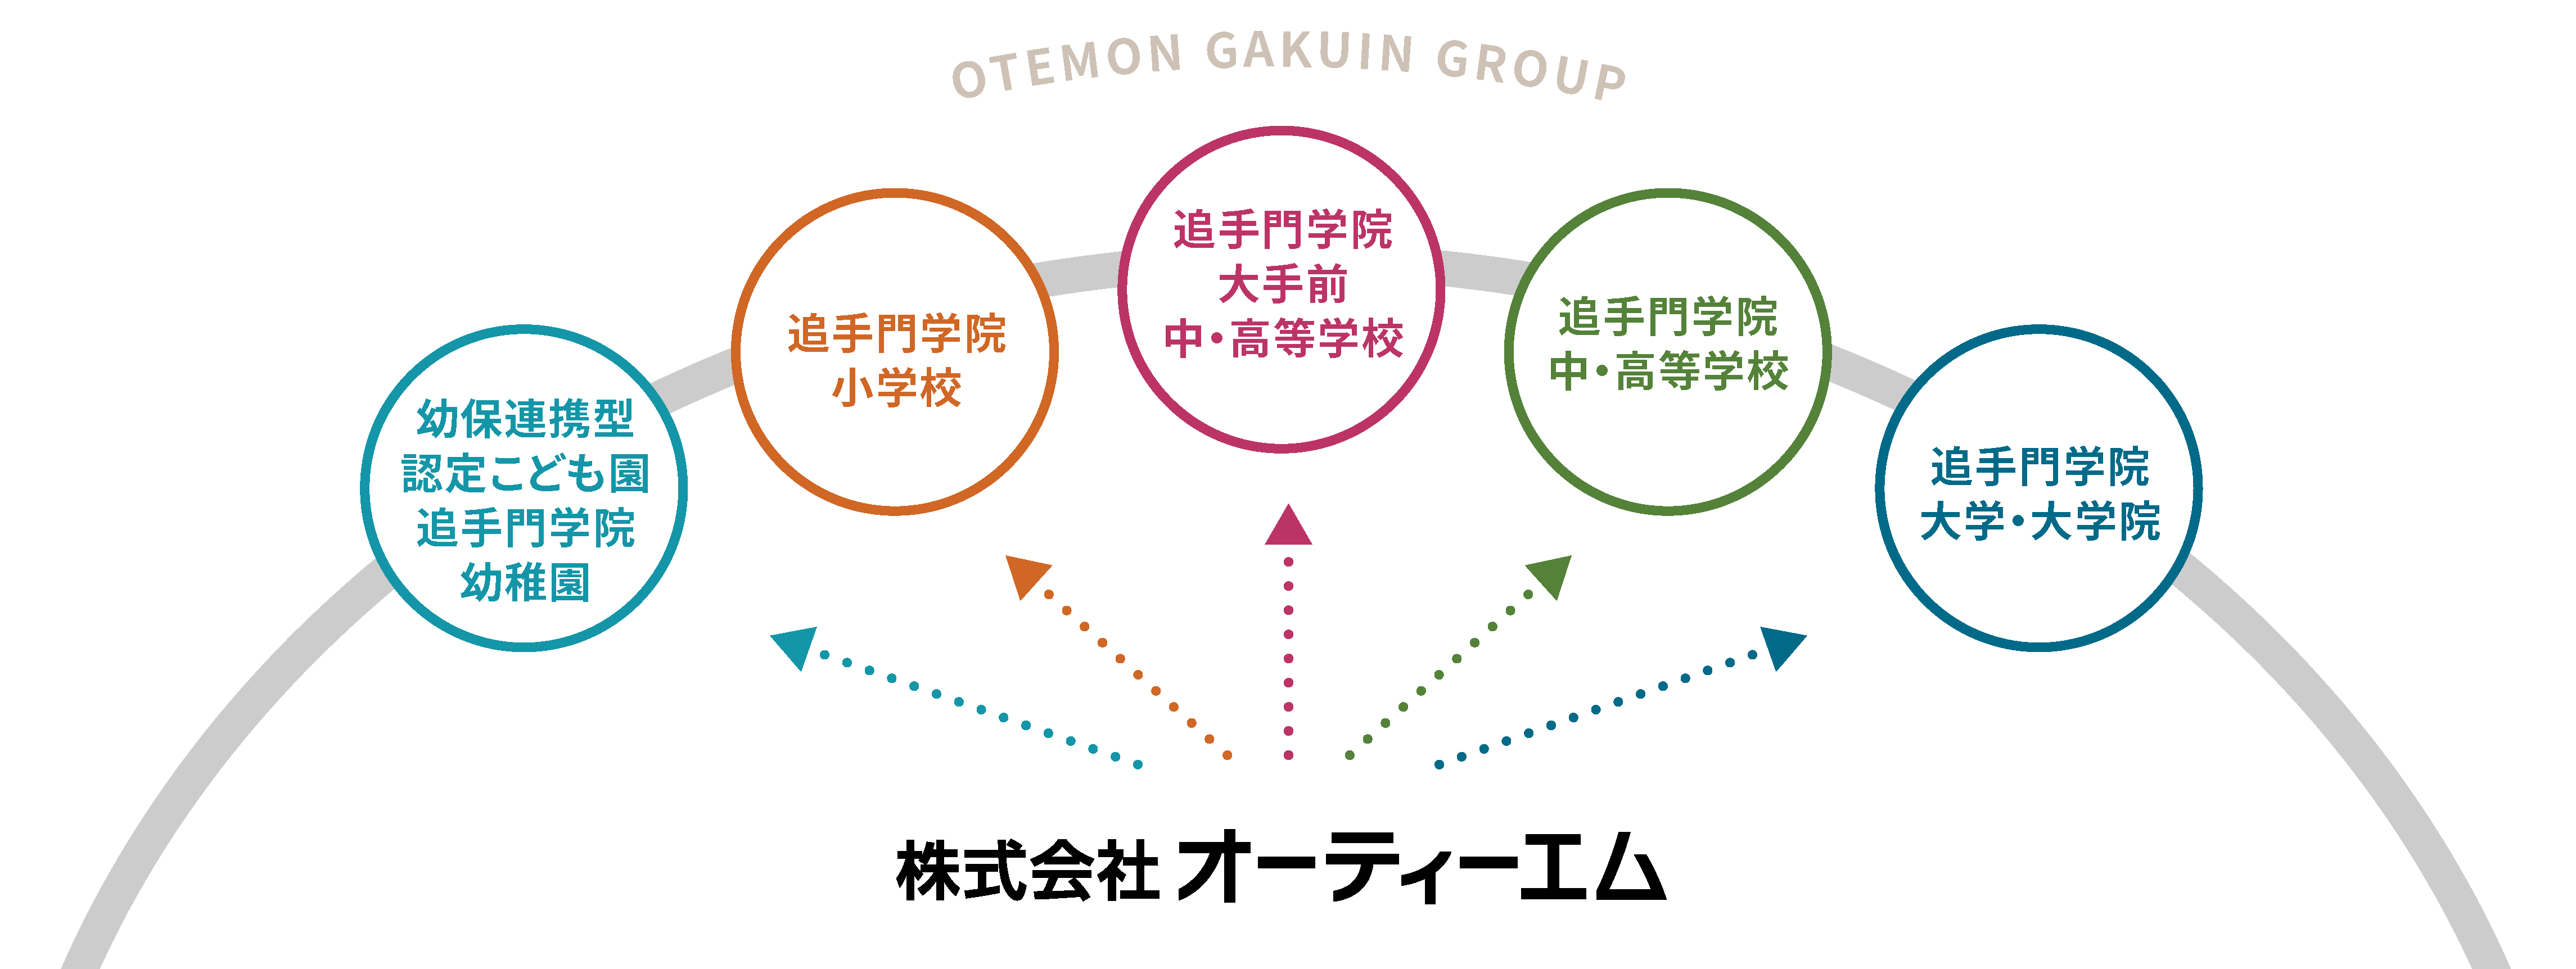 OTEMON GAKUIN GROUP